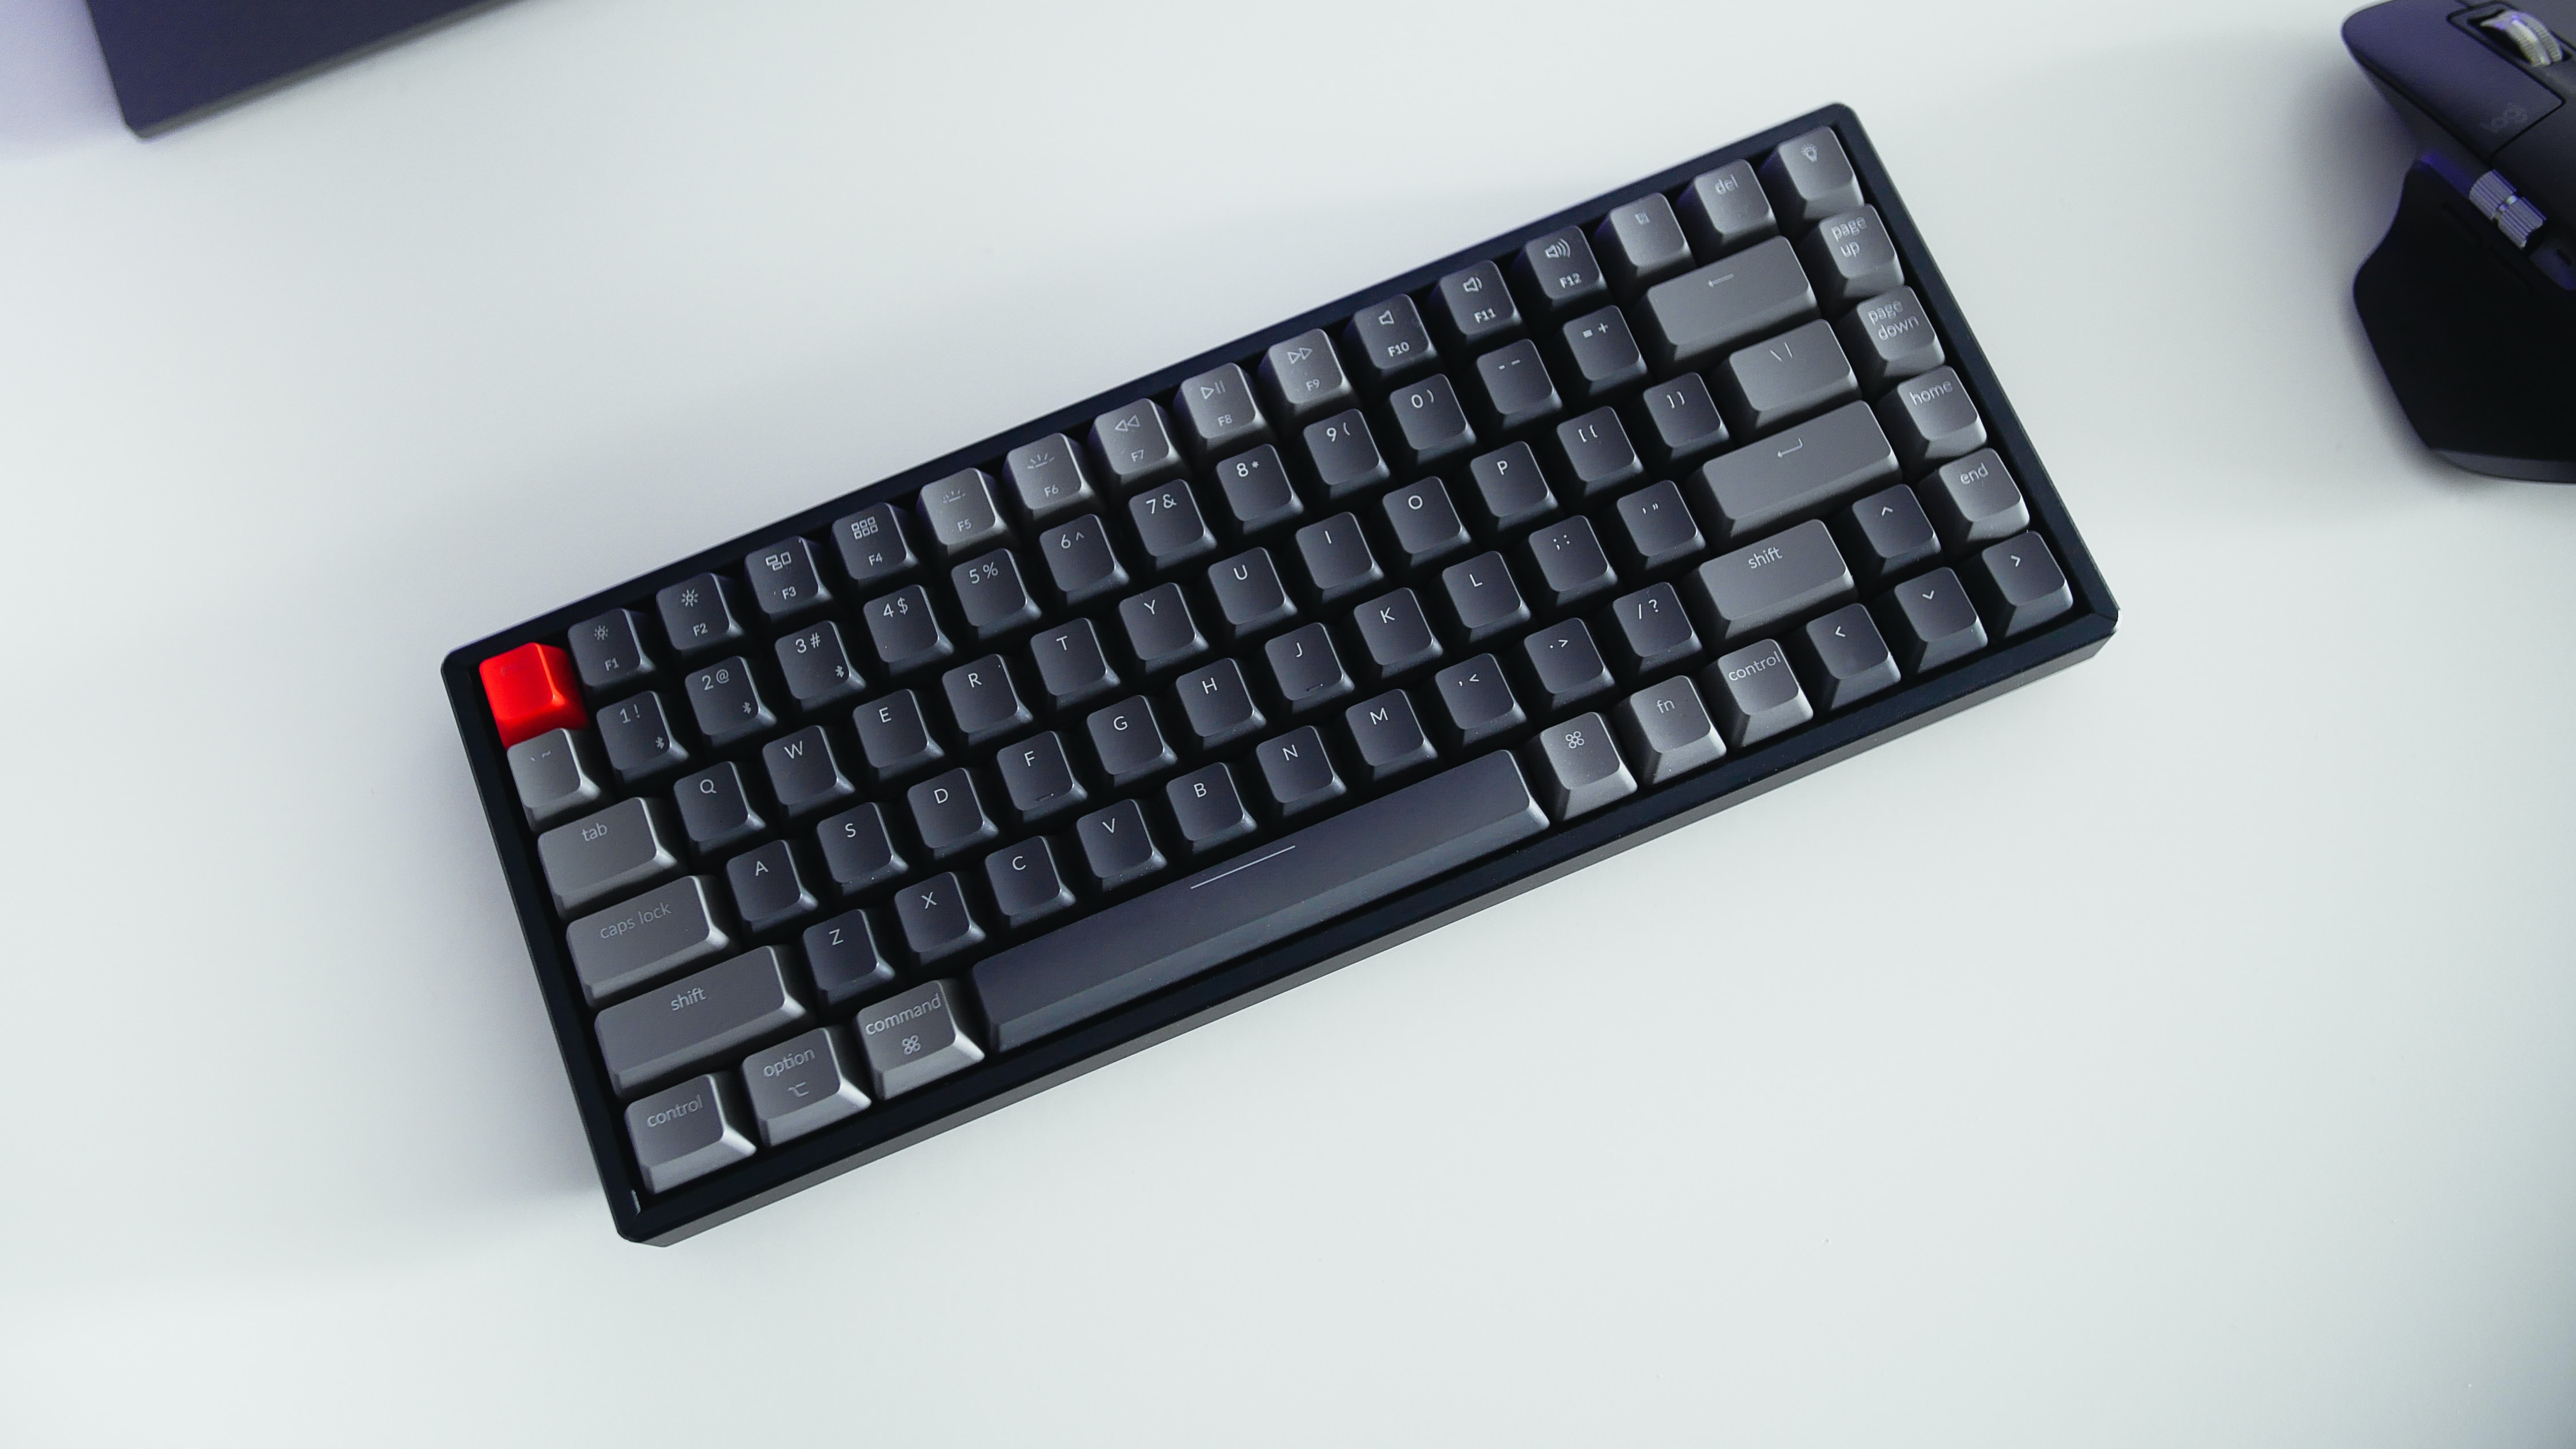 Image of a Keychron keyboard.